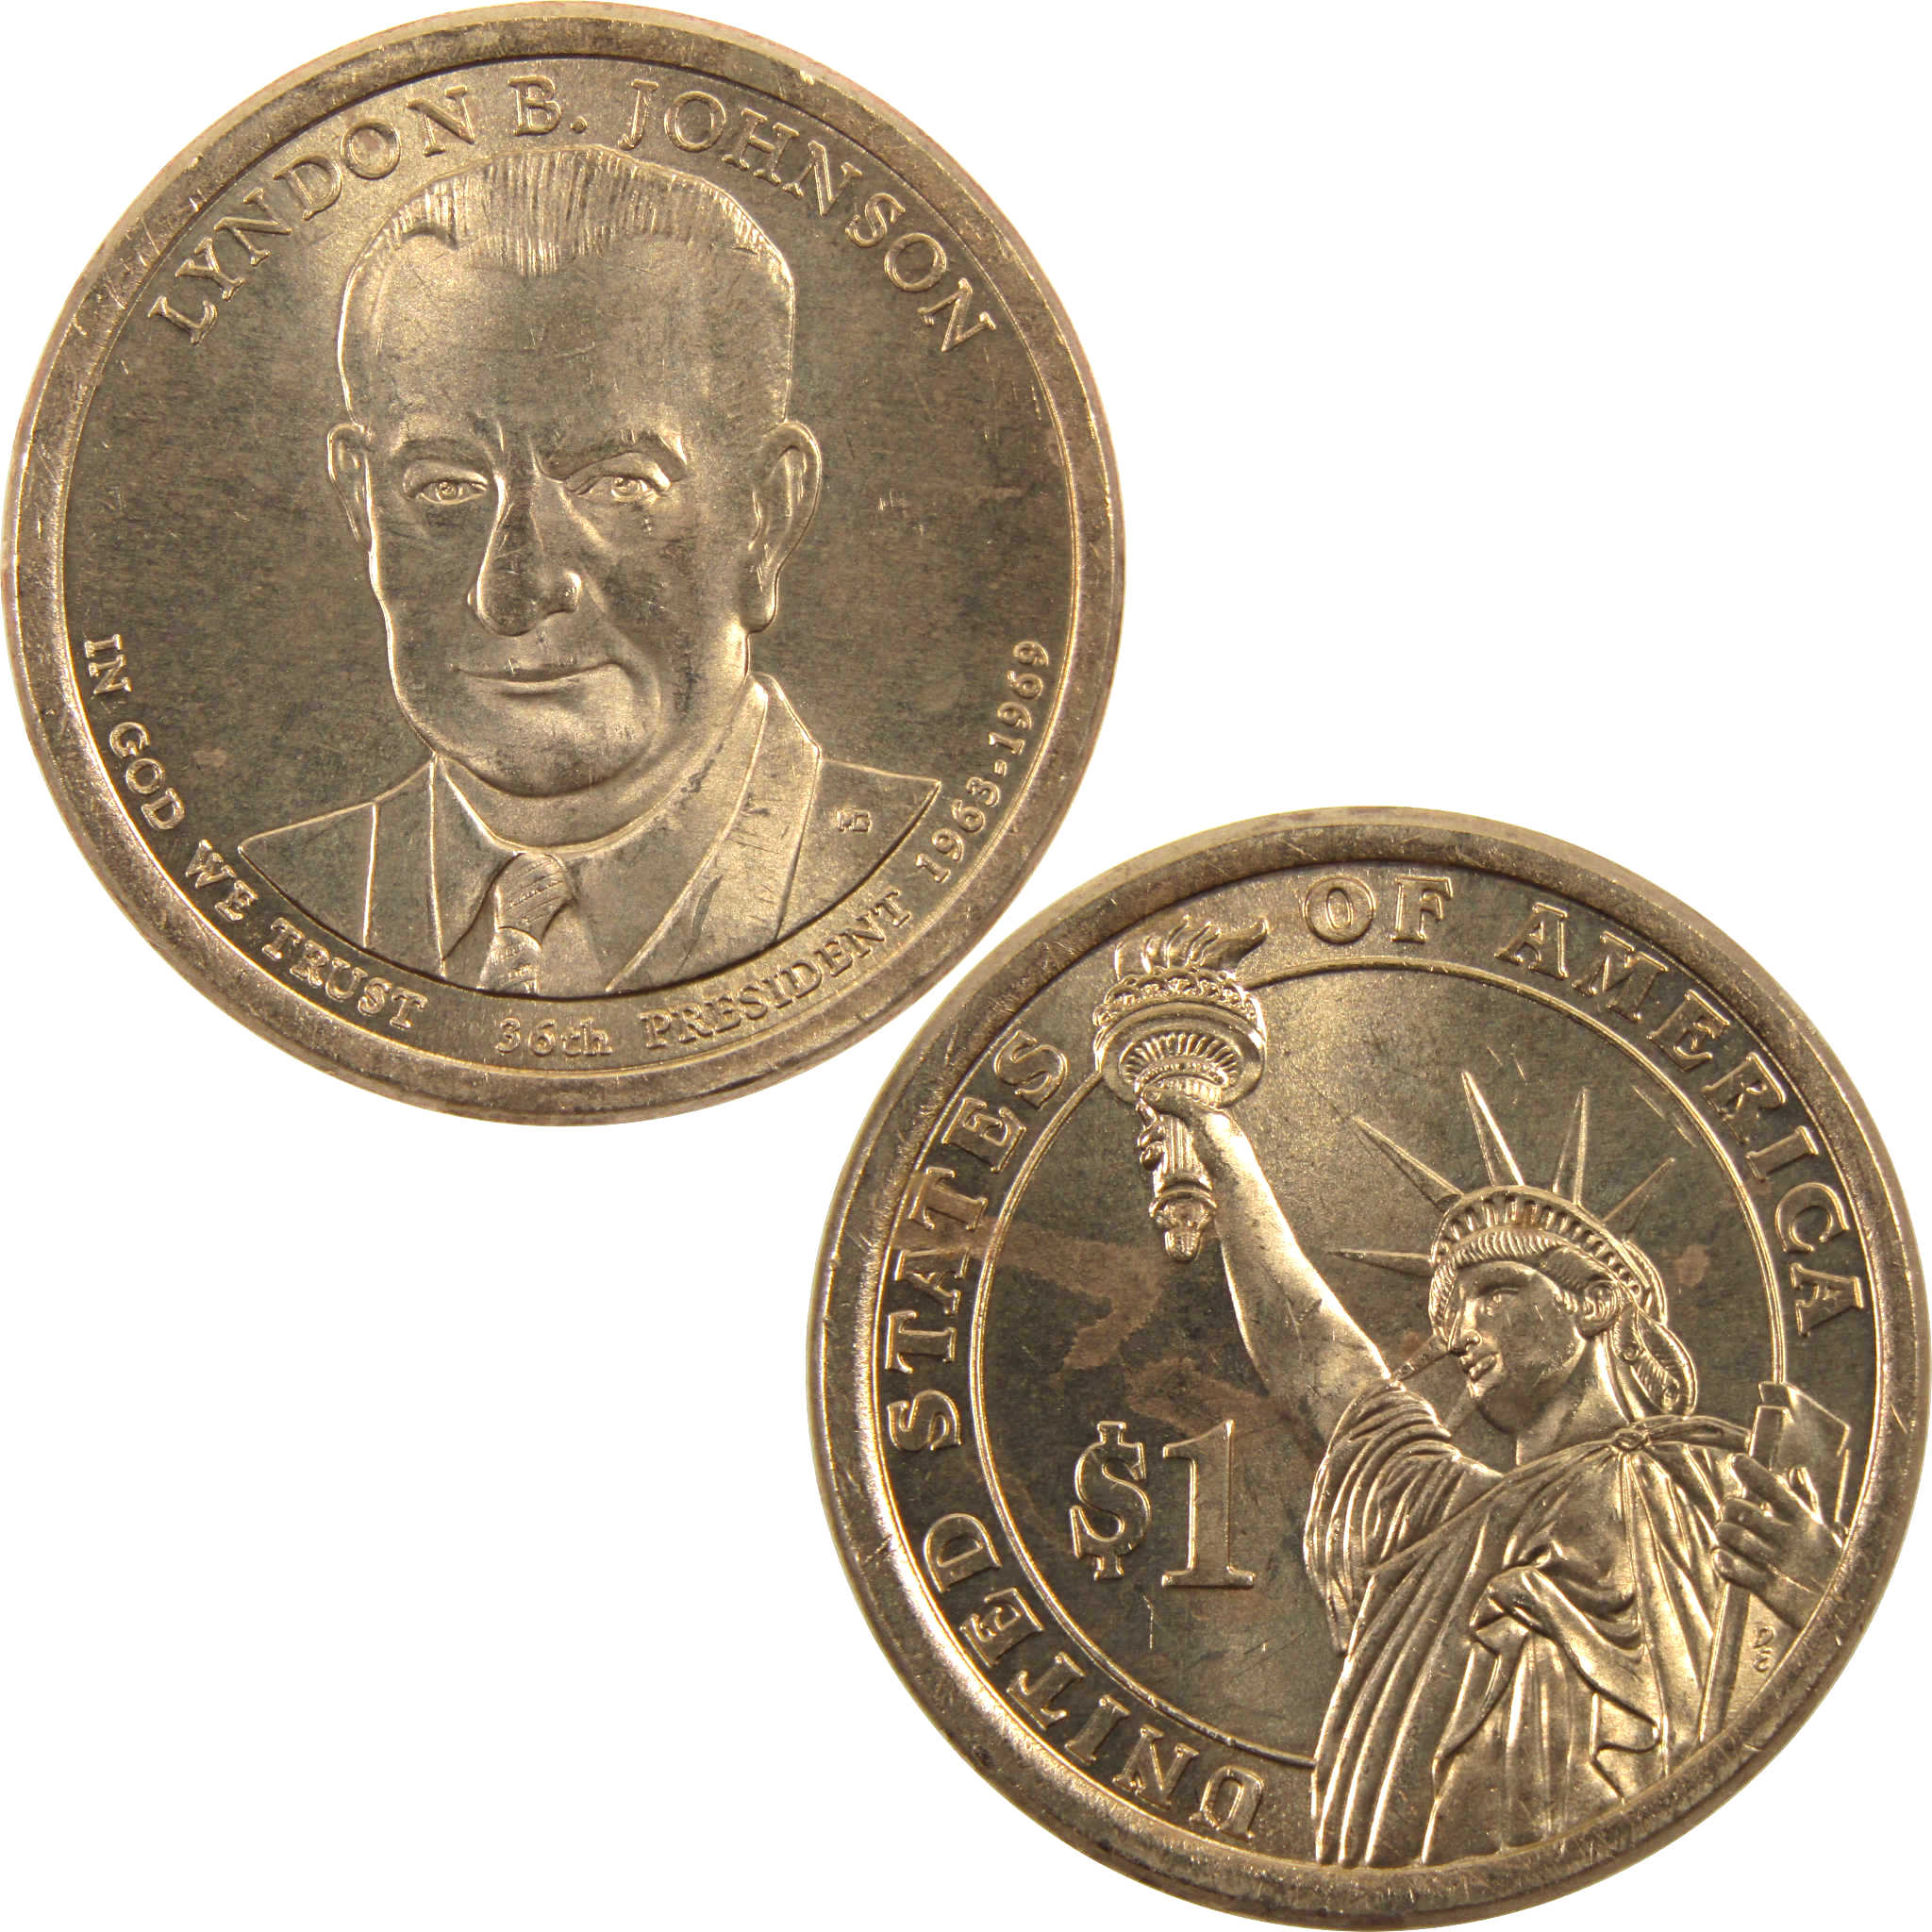 2015 P Lyndon B Johnson Presidential Dollar BU Uncirculated $1 Coin